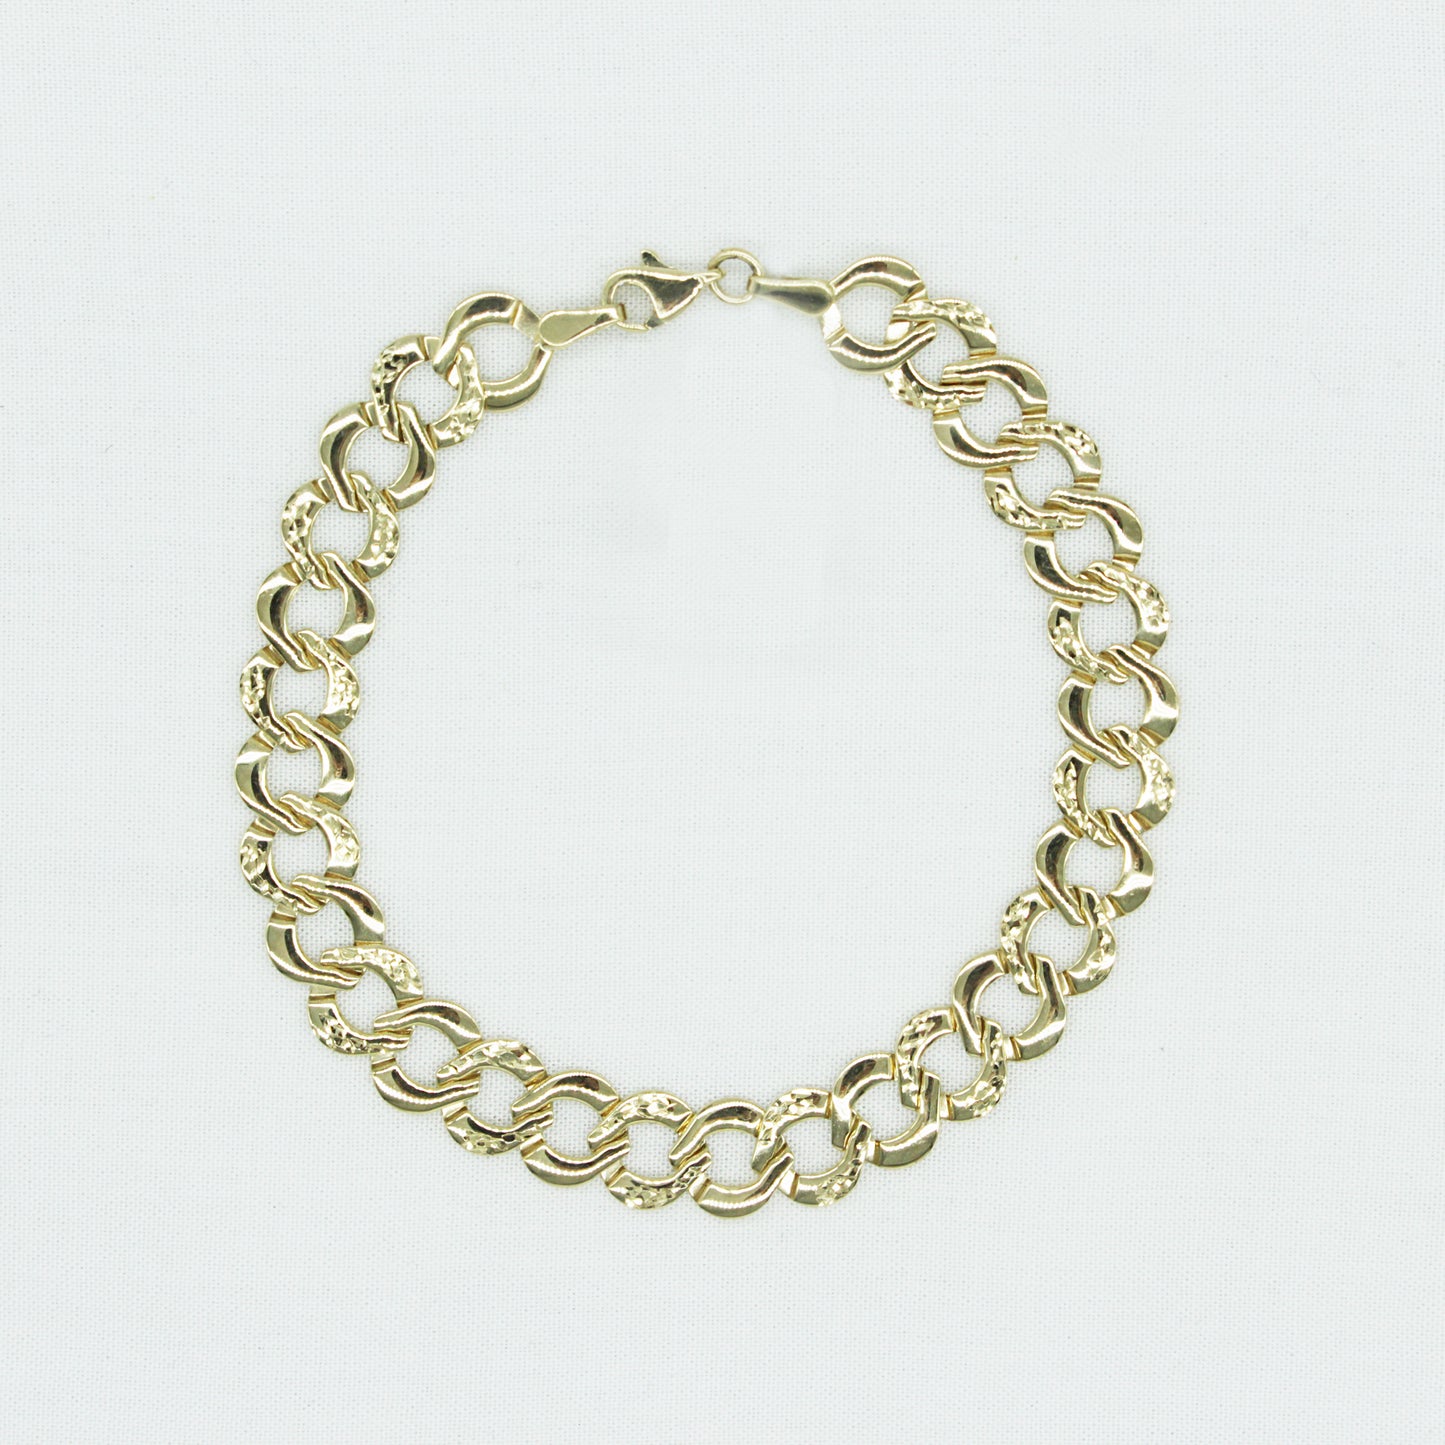 Oval Curb Link Bracelet in 10K (8.5mm x 1mm)